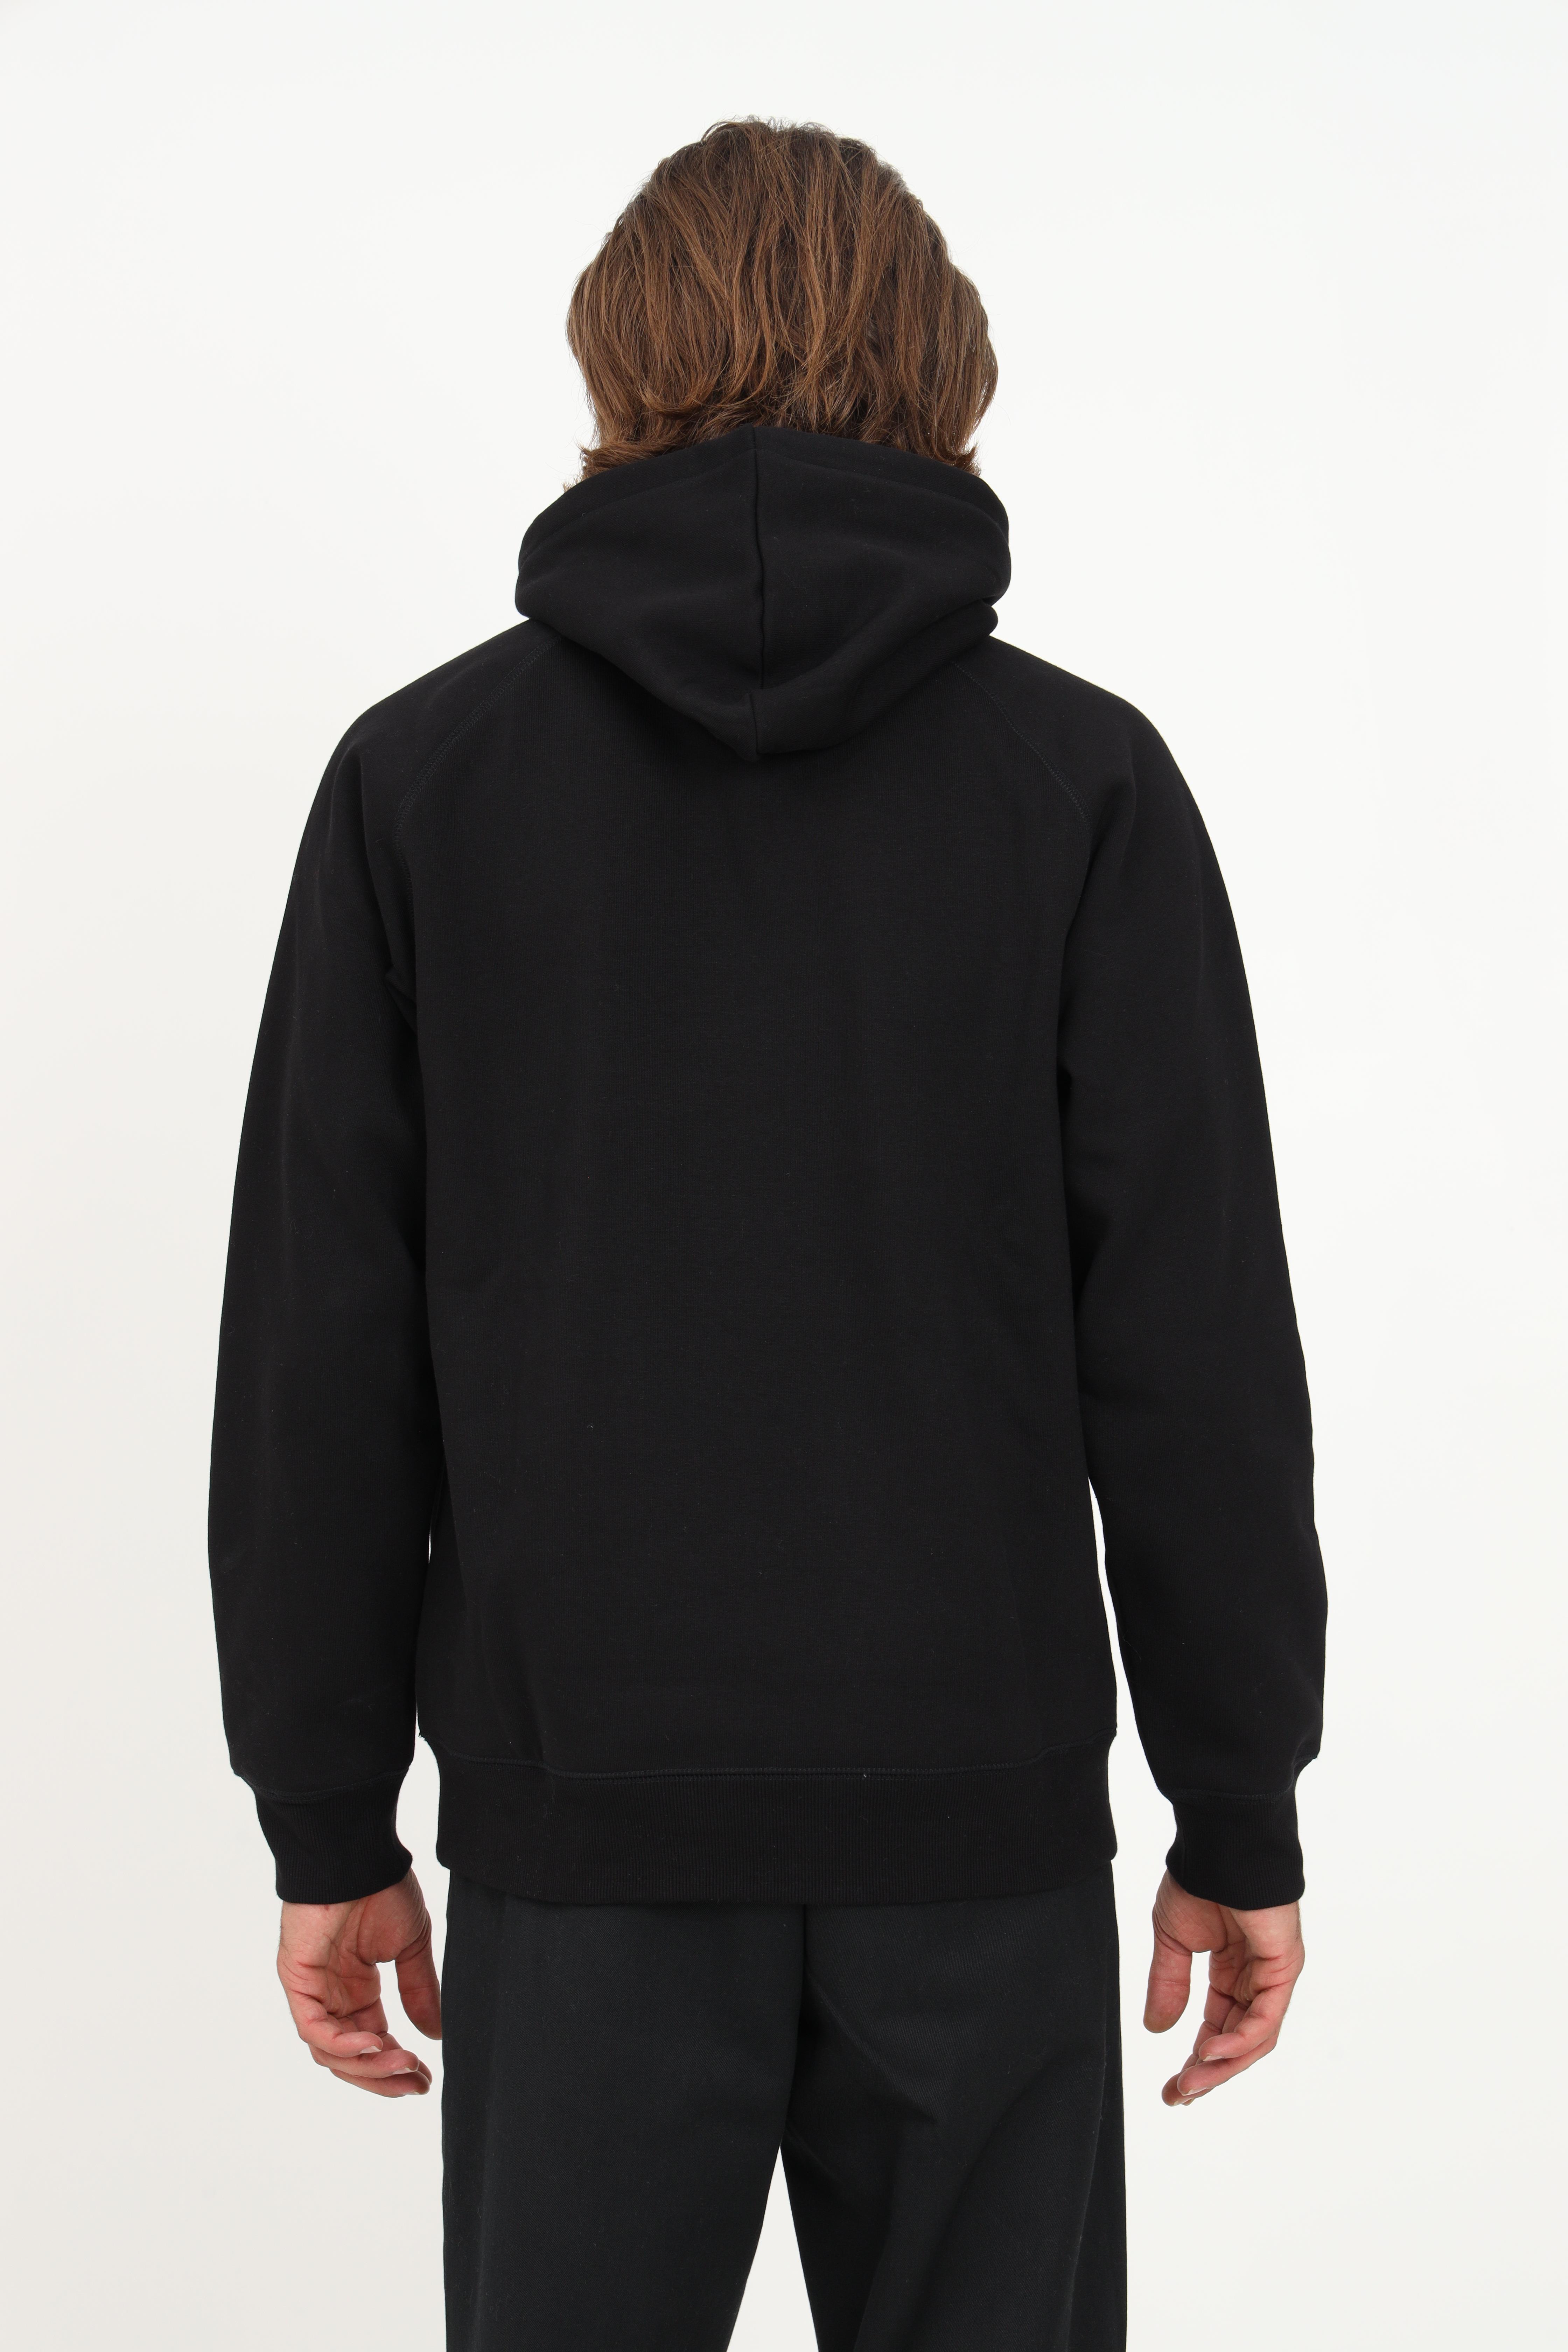 Men's black hooded sweatshirt with logo embroidery CARHARTT WIP | I02638400FXX